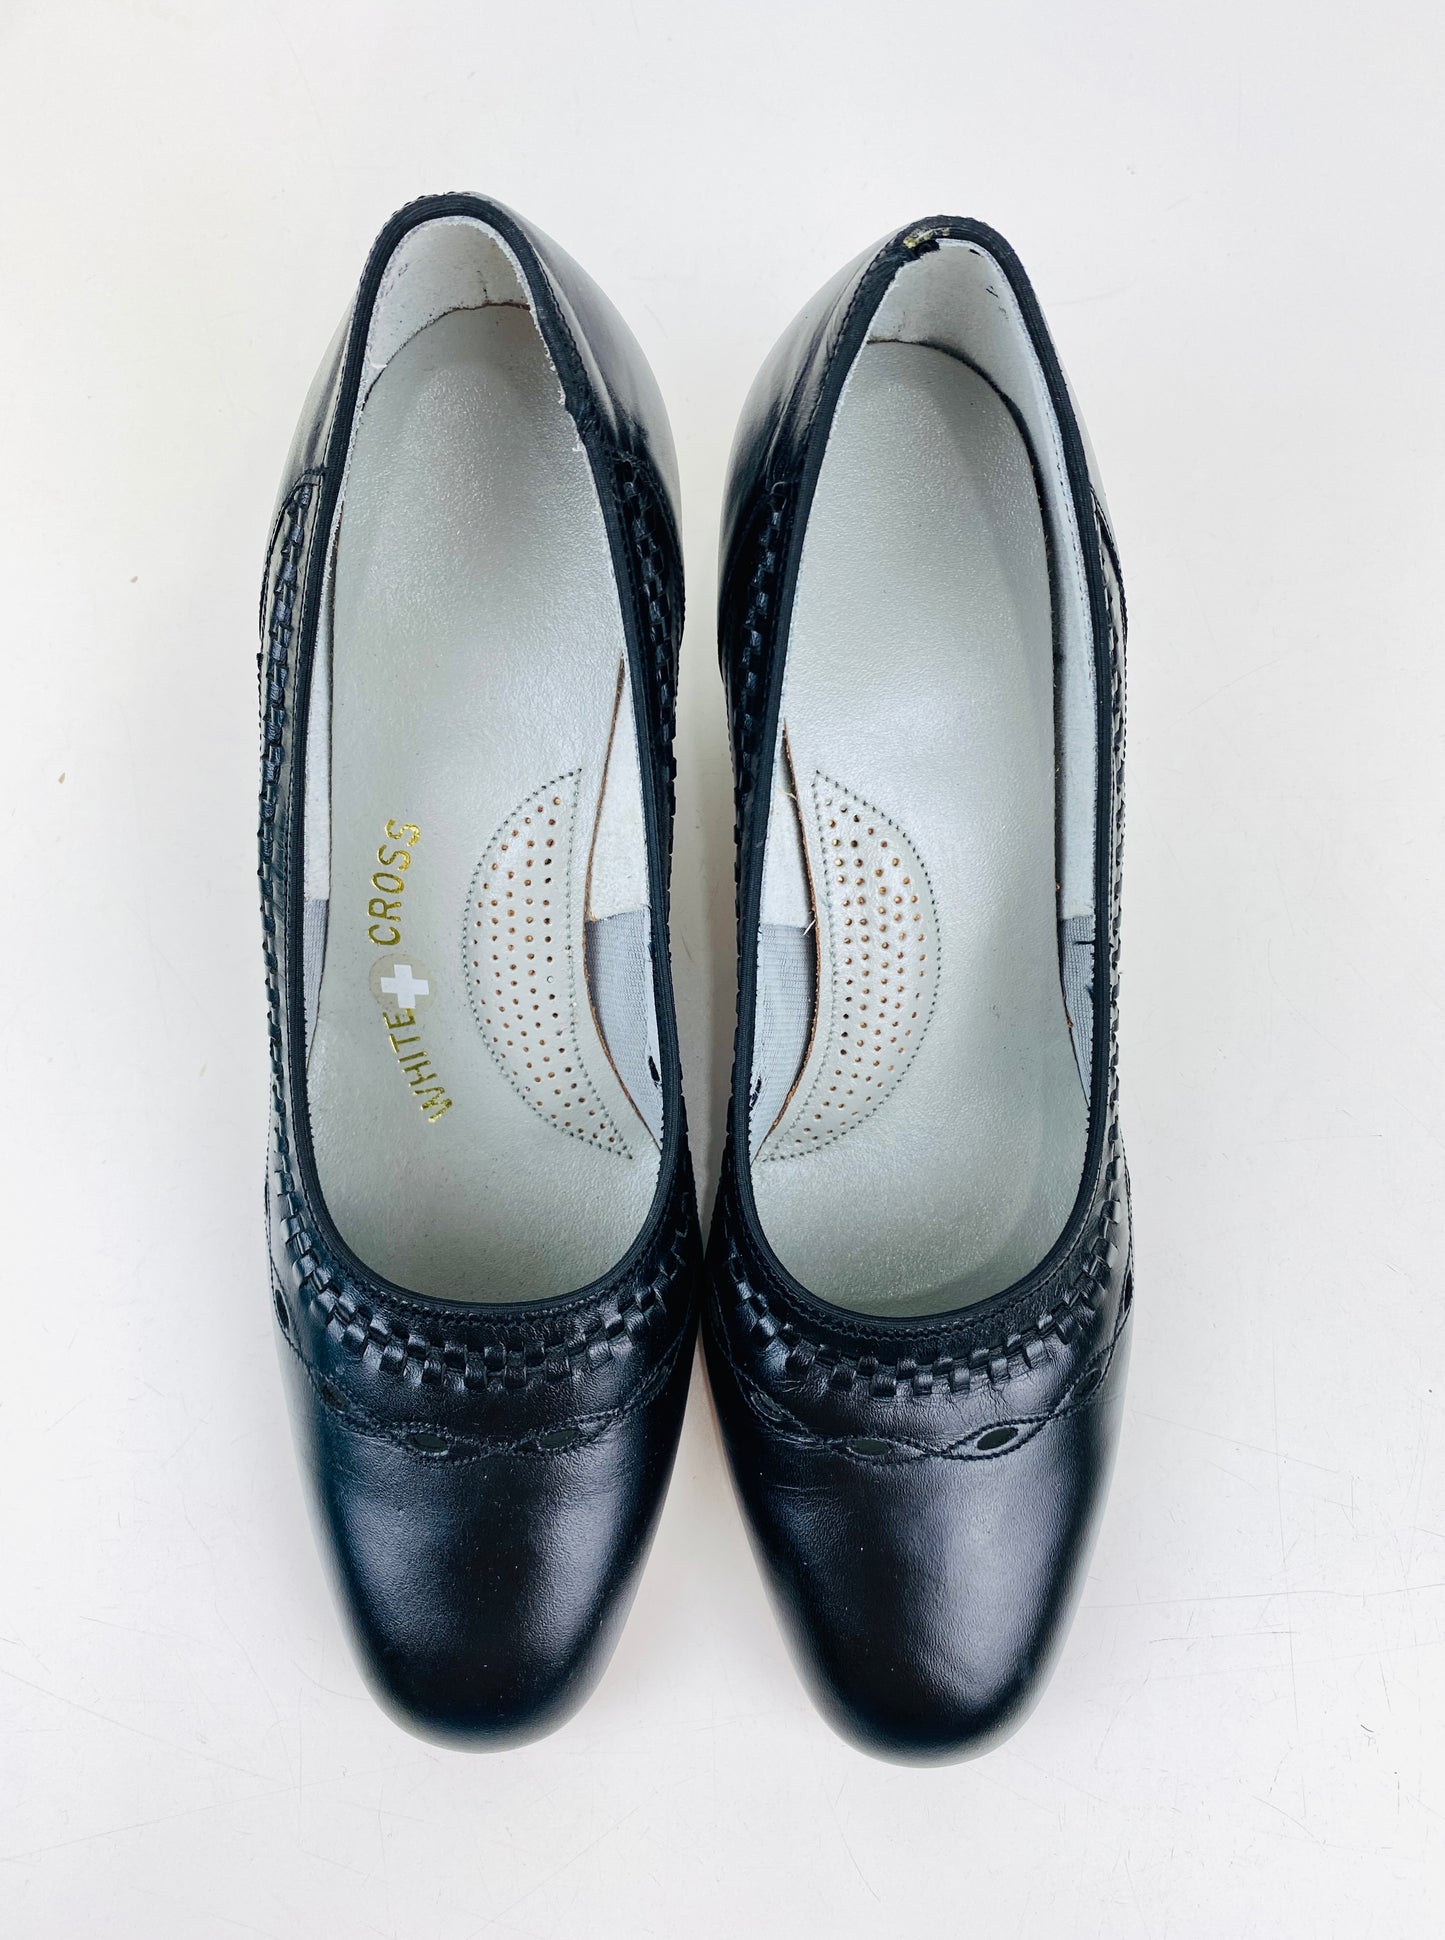 Vintage Deadstock Shoes, Women's 1980s Black Leather Mid-Heel Pumps, NOS, 8230